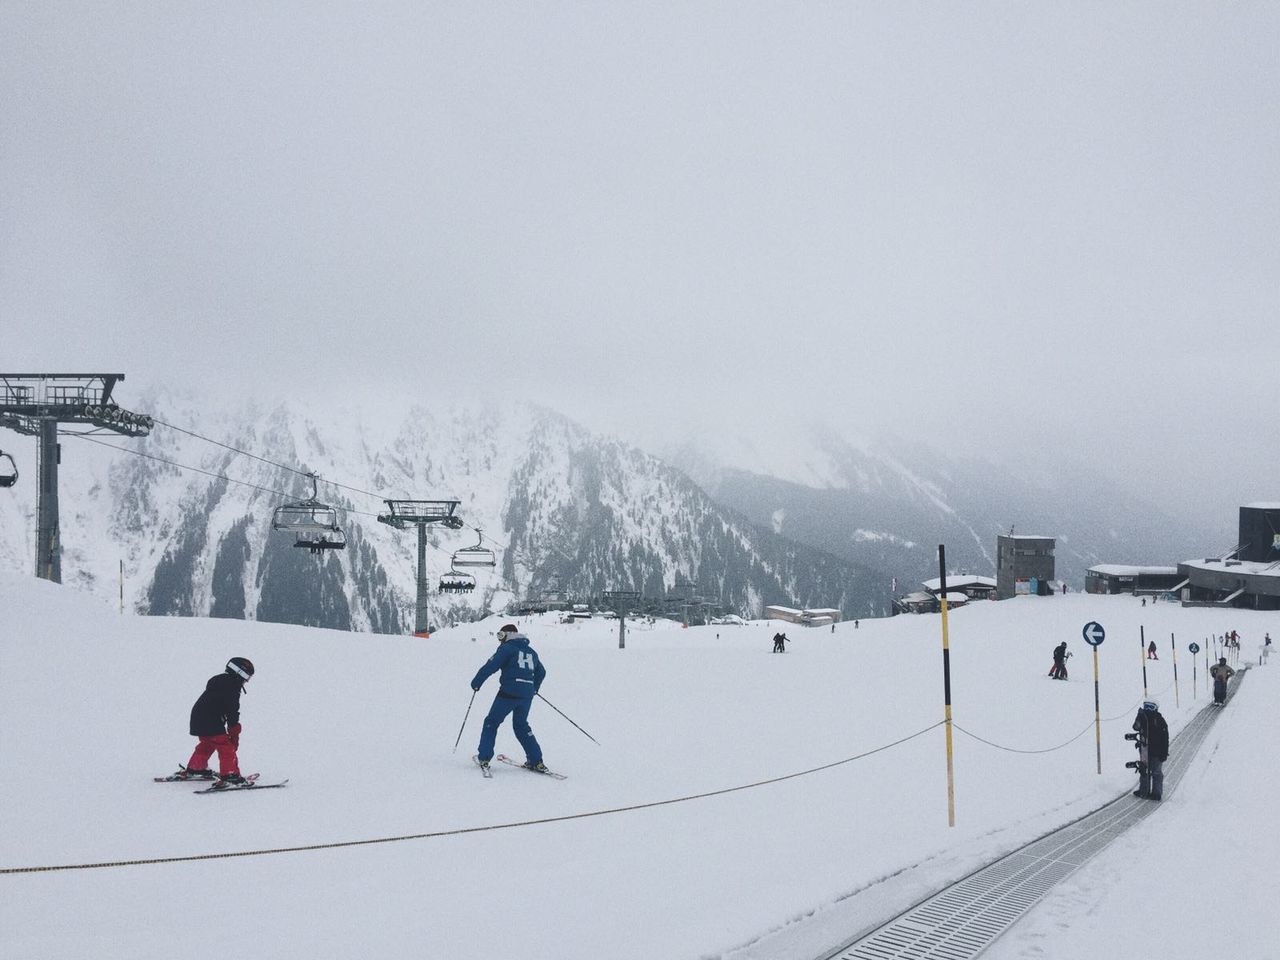 People skiing on snowy area